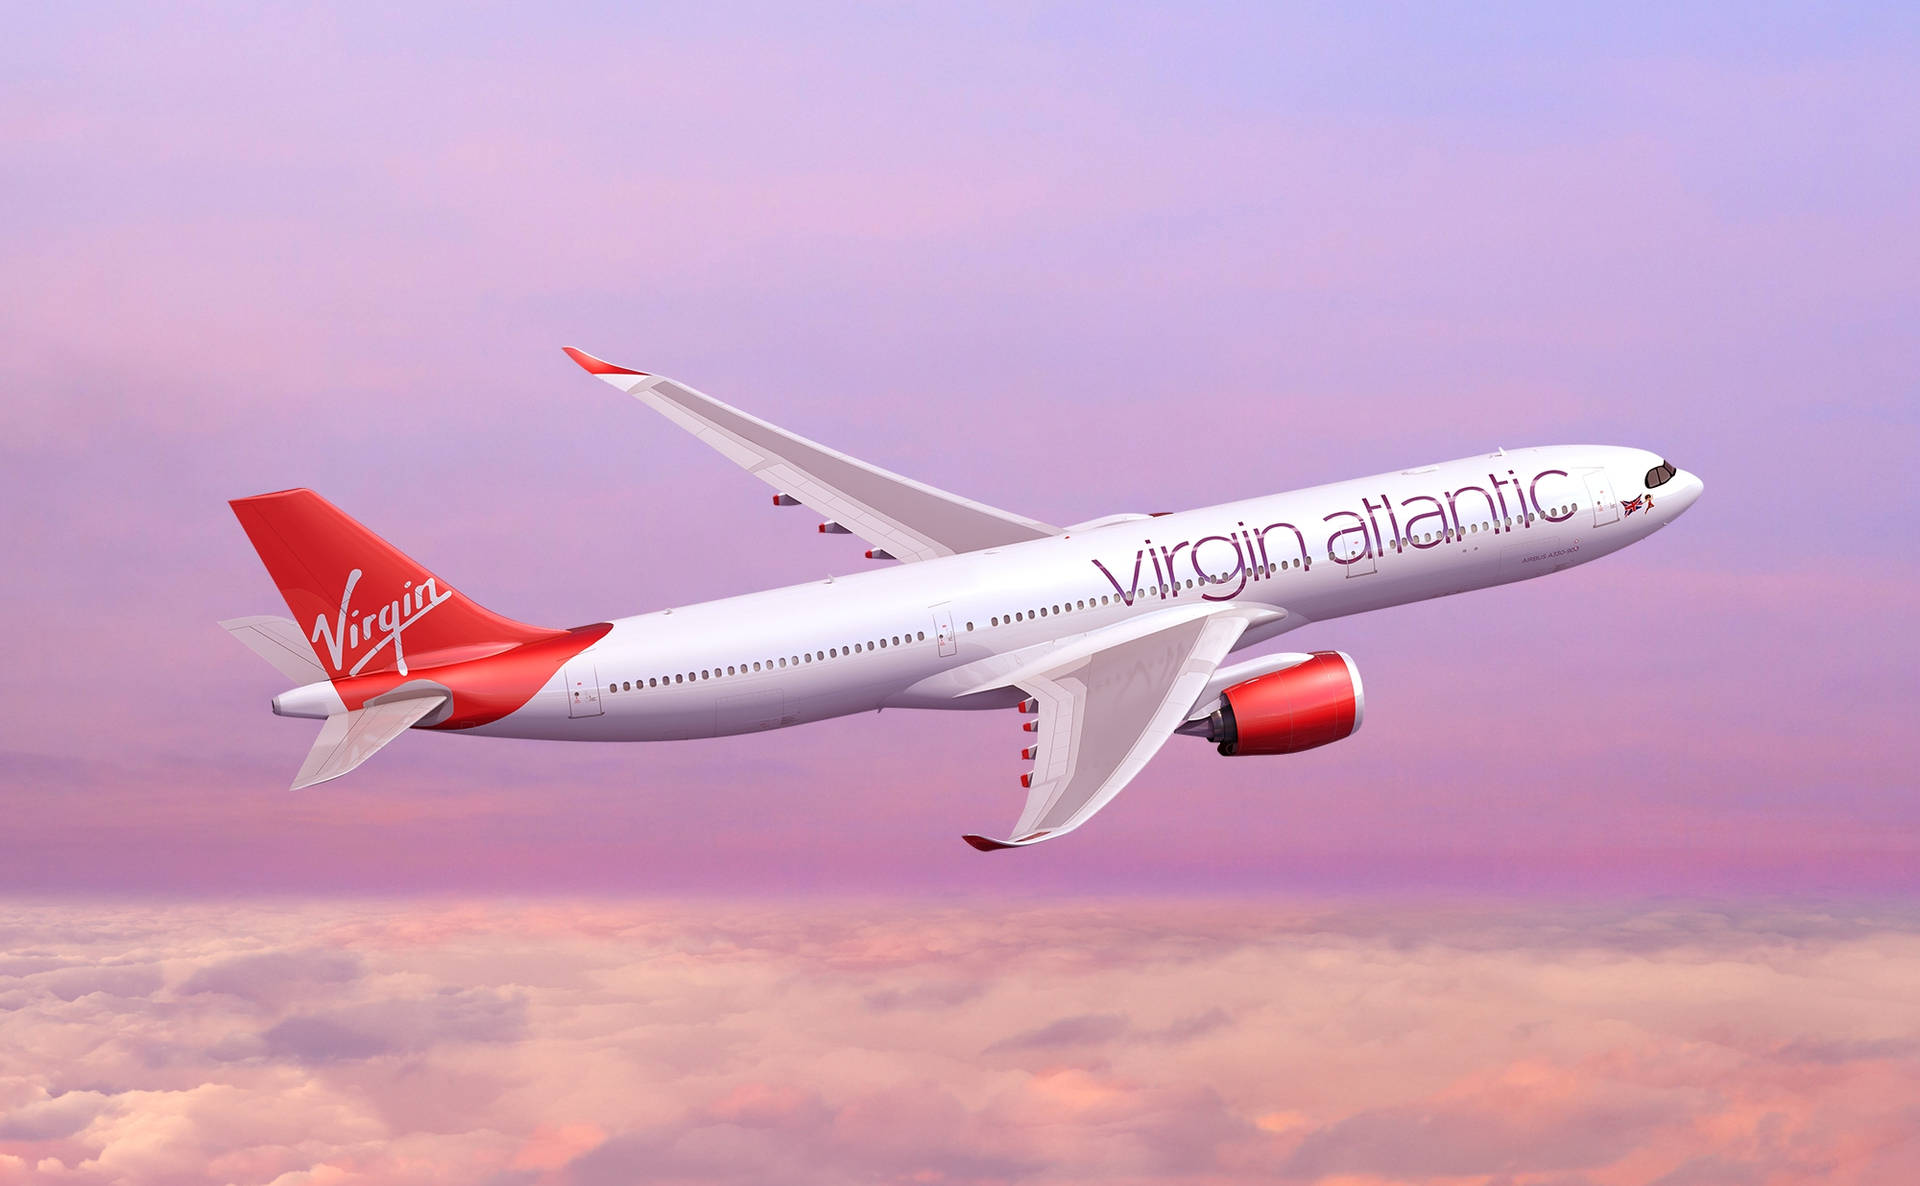 Gliding Virgin Atlantic Airplane Wallpaper